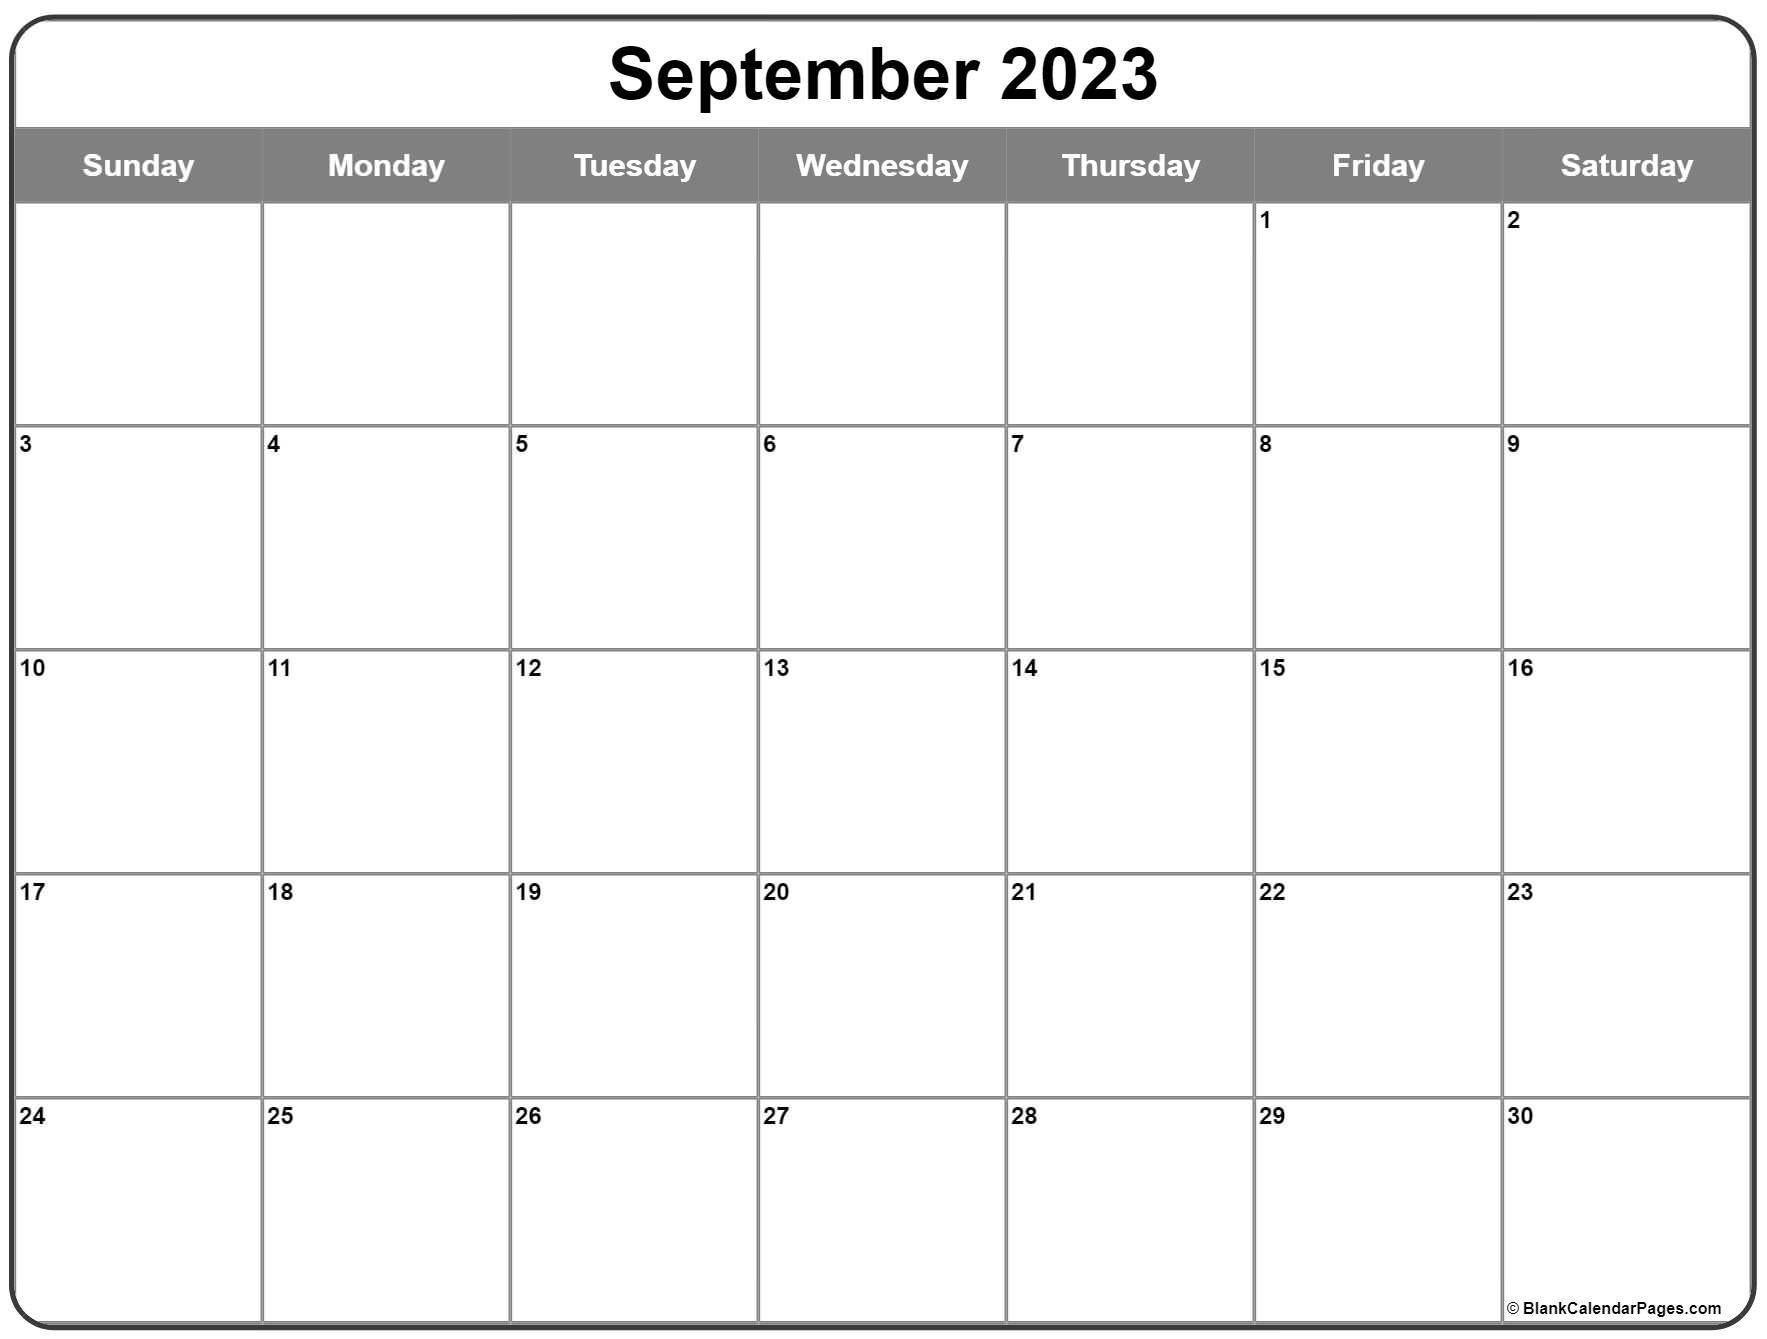 september-2023-calendar-free-printable-calendar-printable-september-2023-calendar-2023